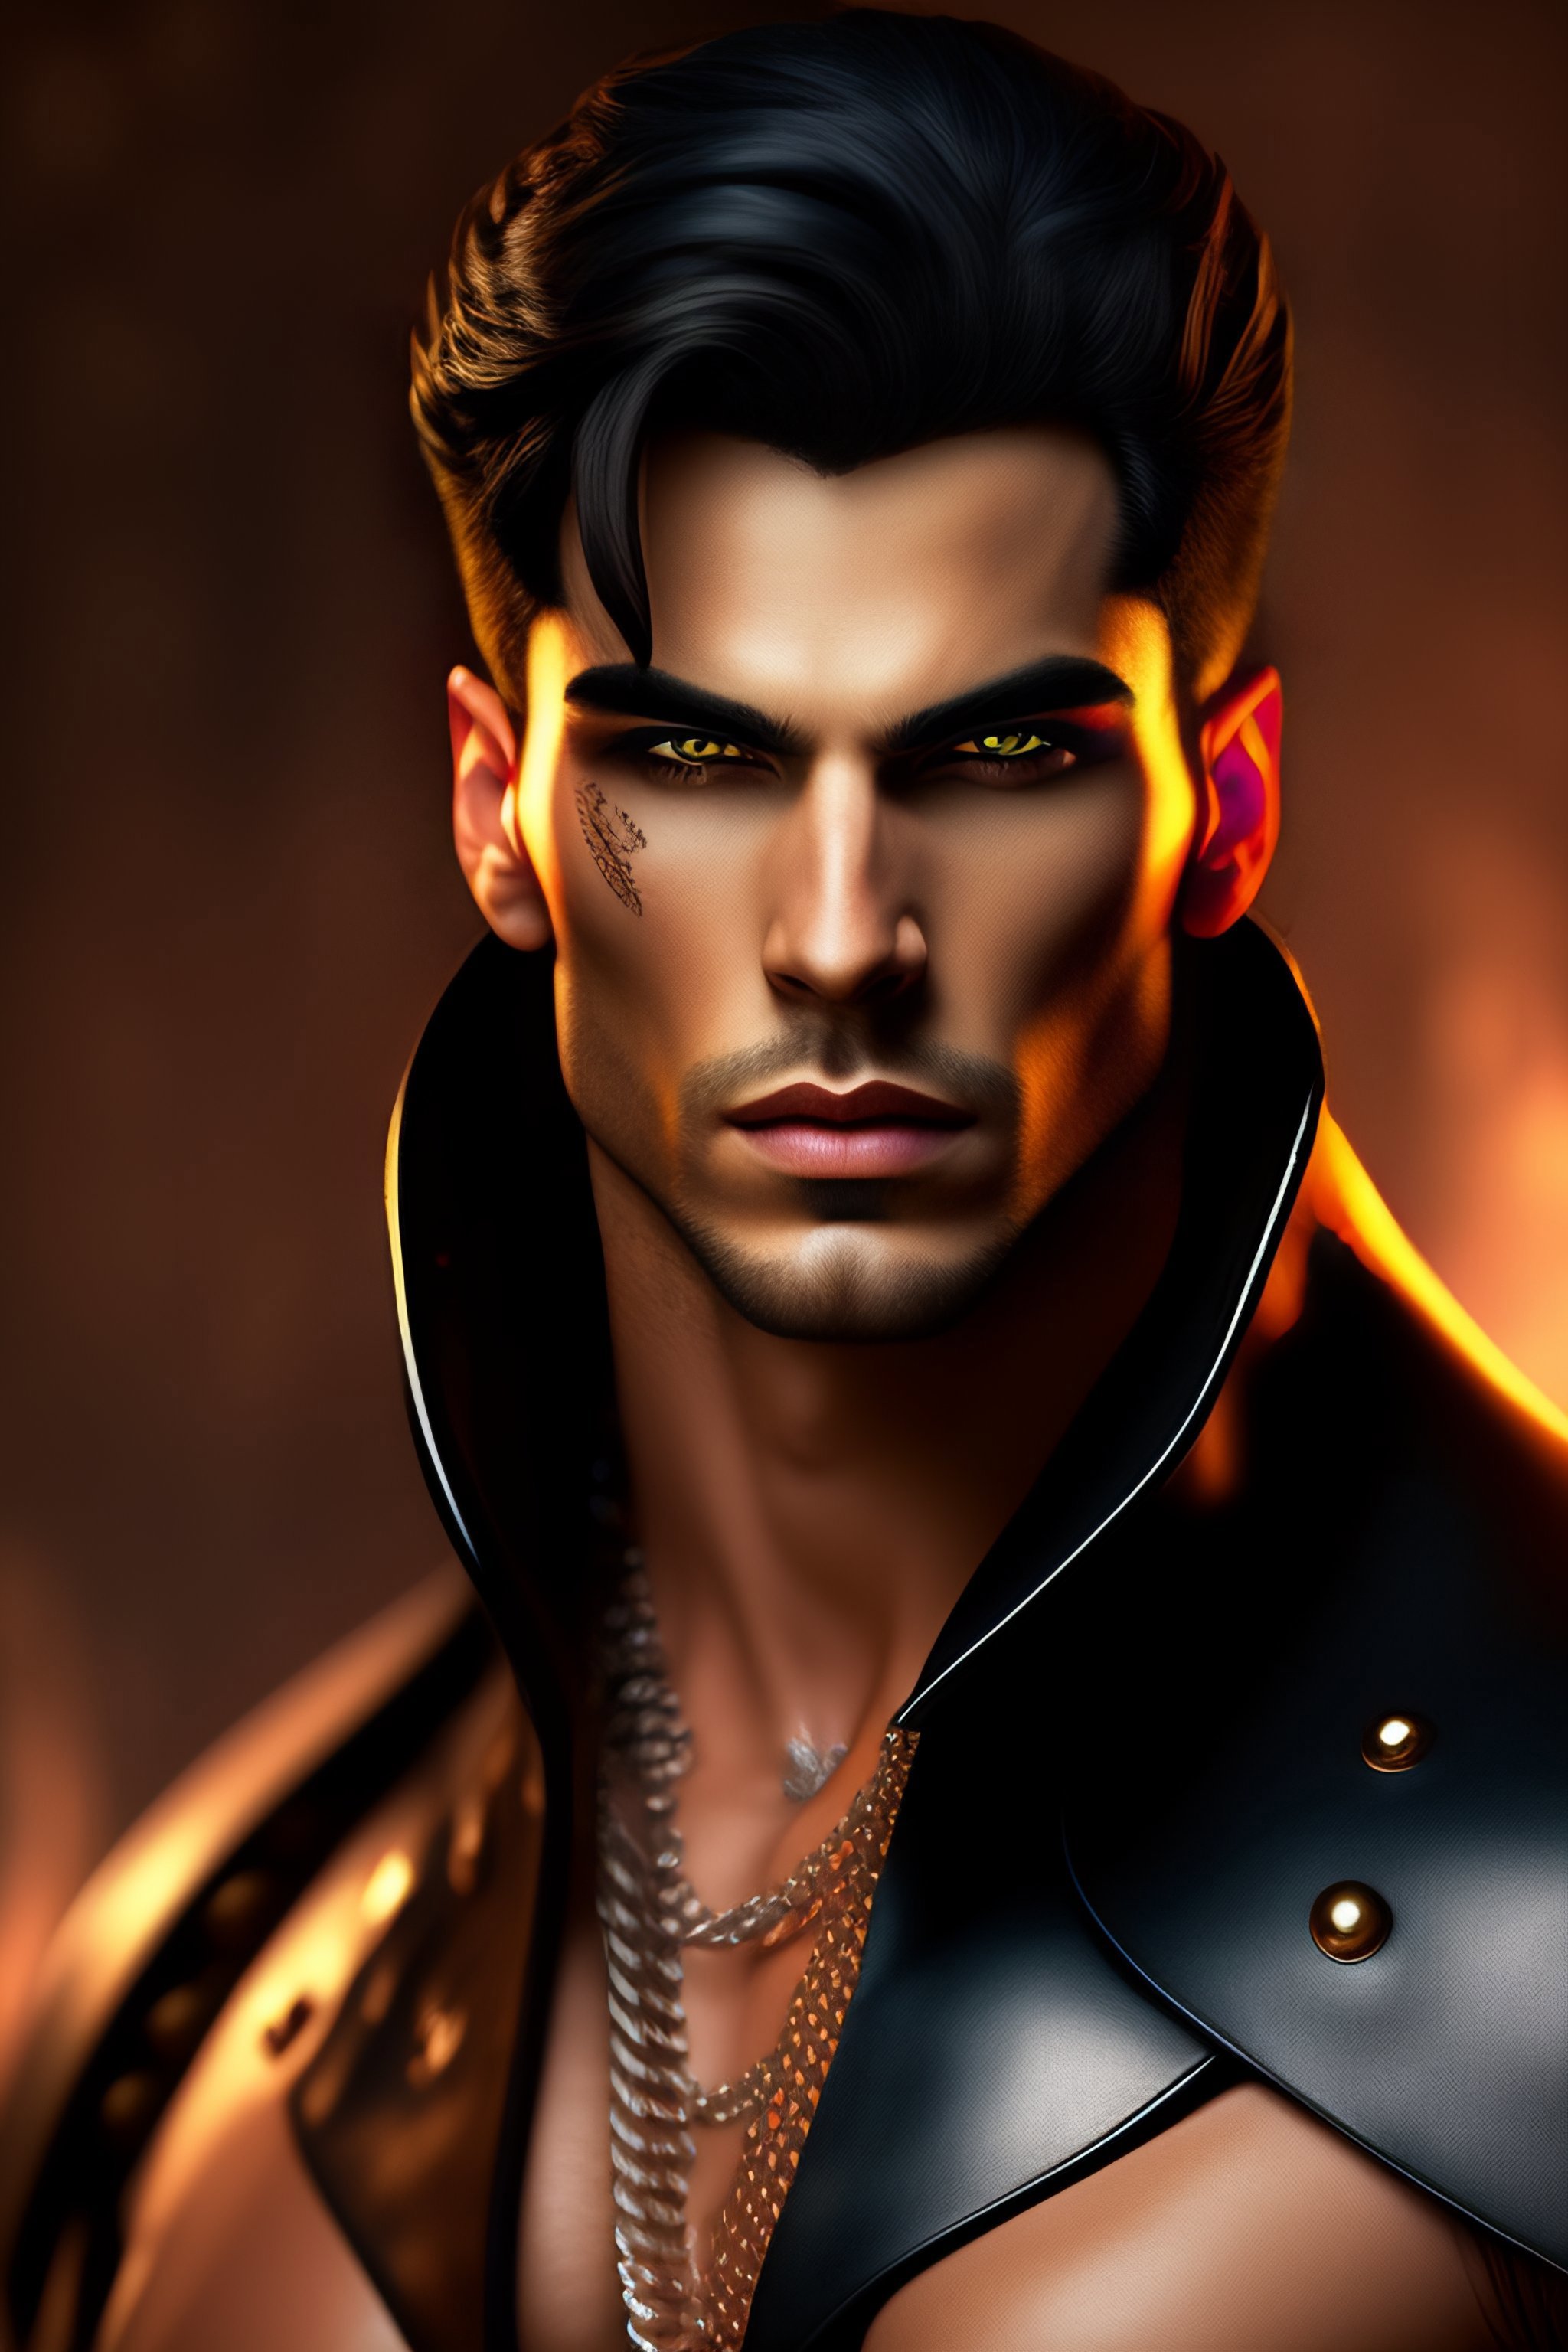 Handsome male vampire